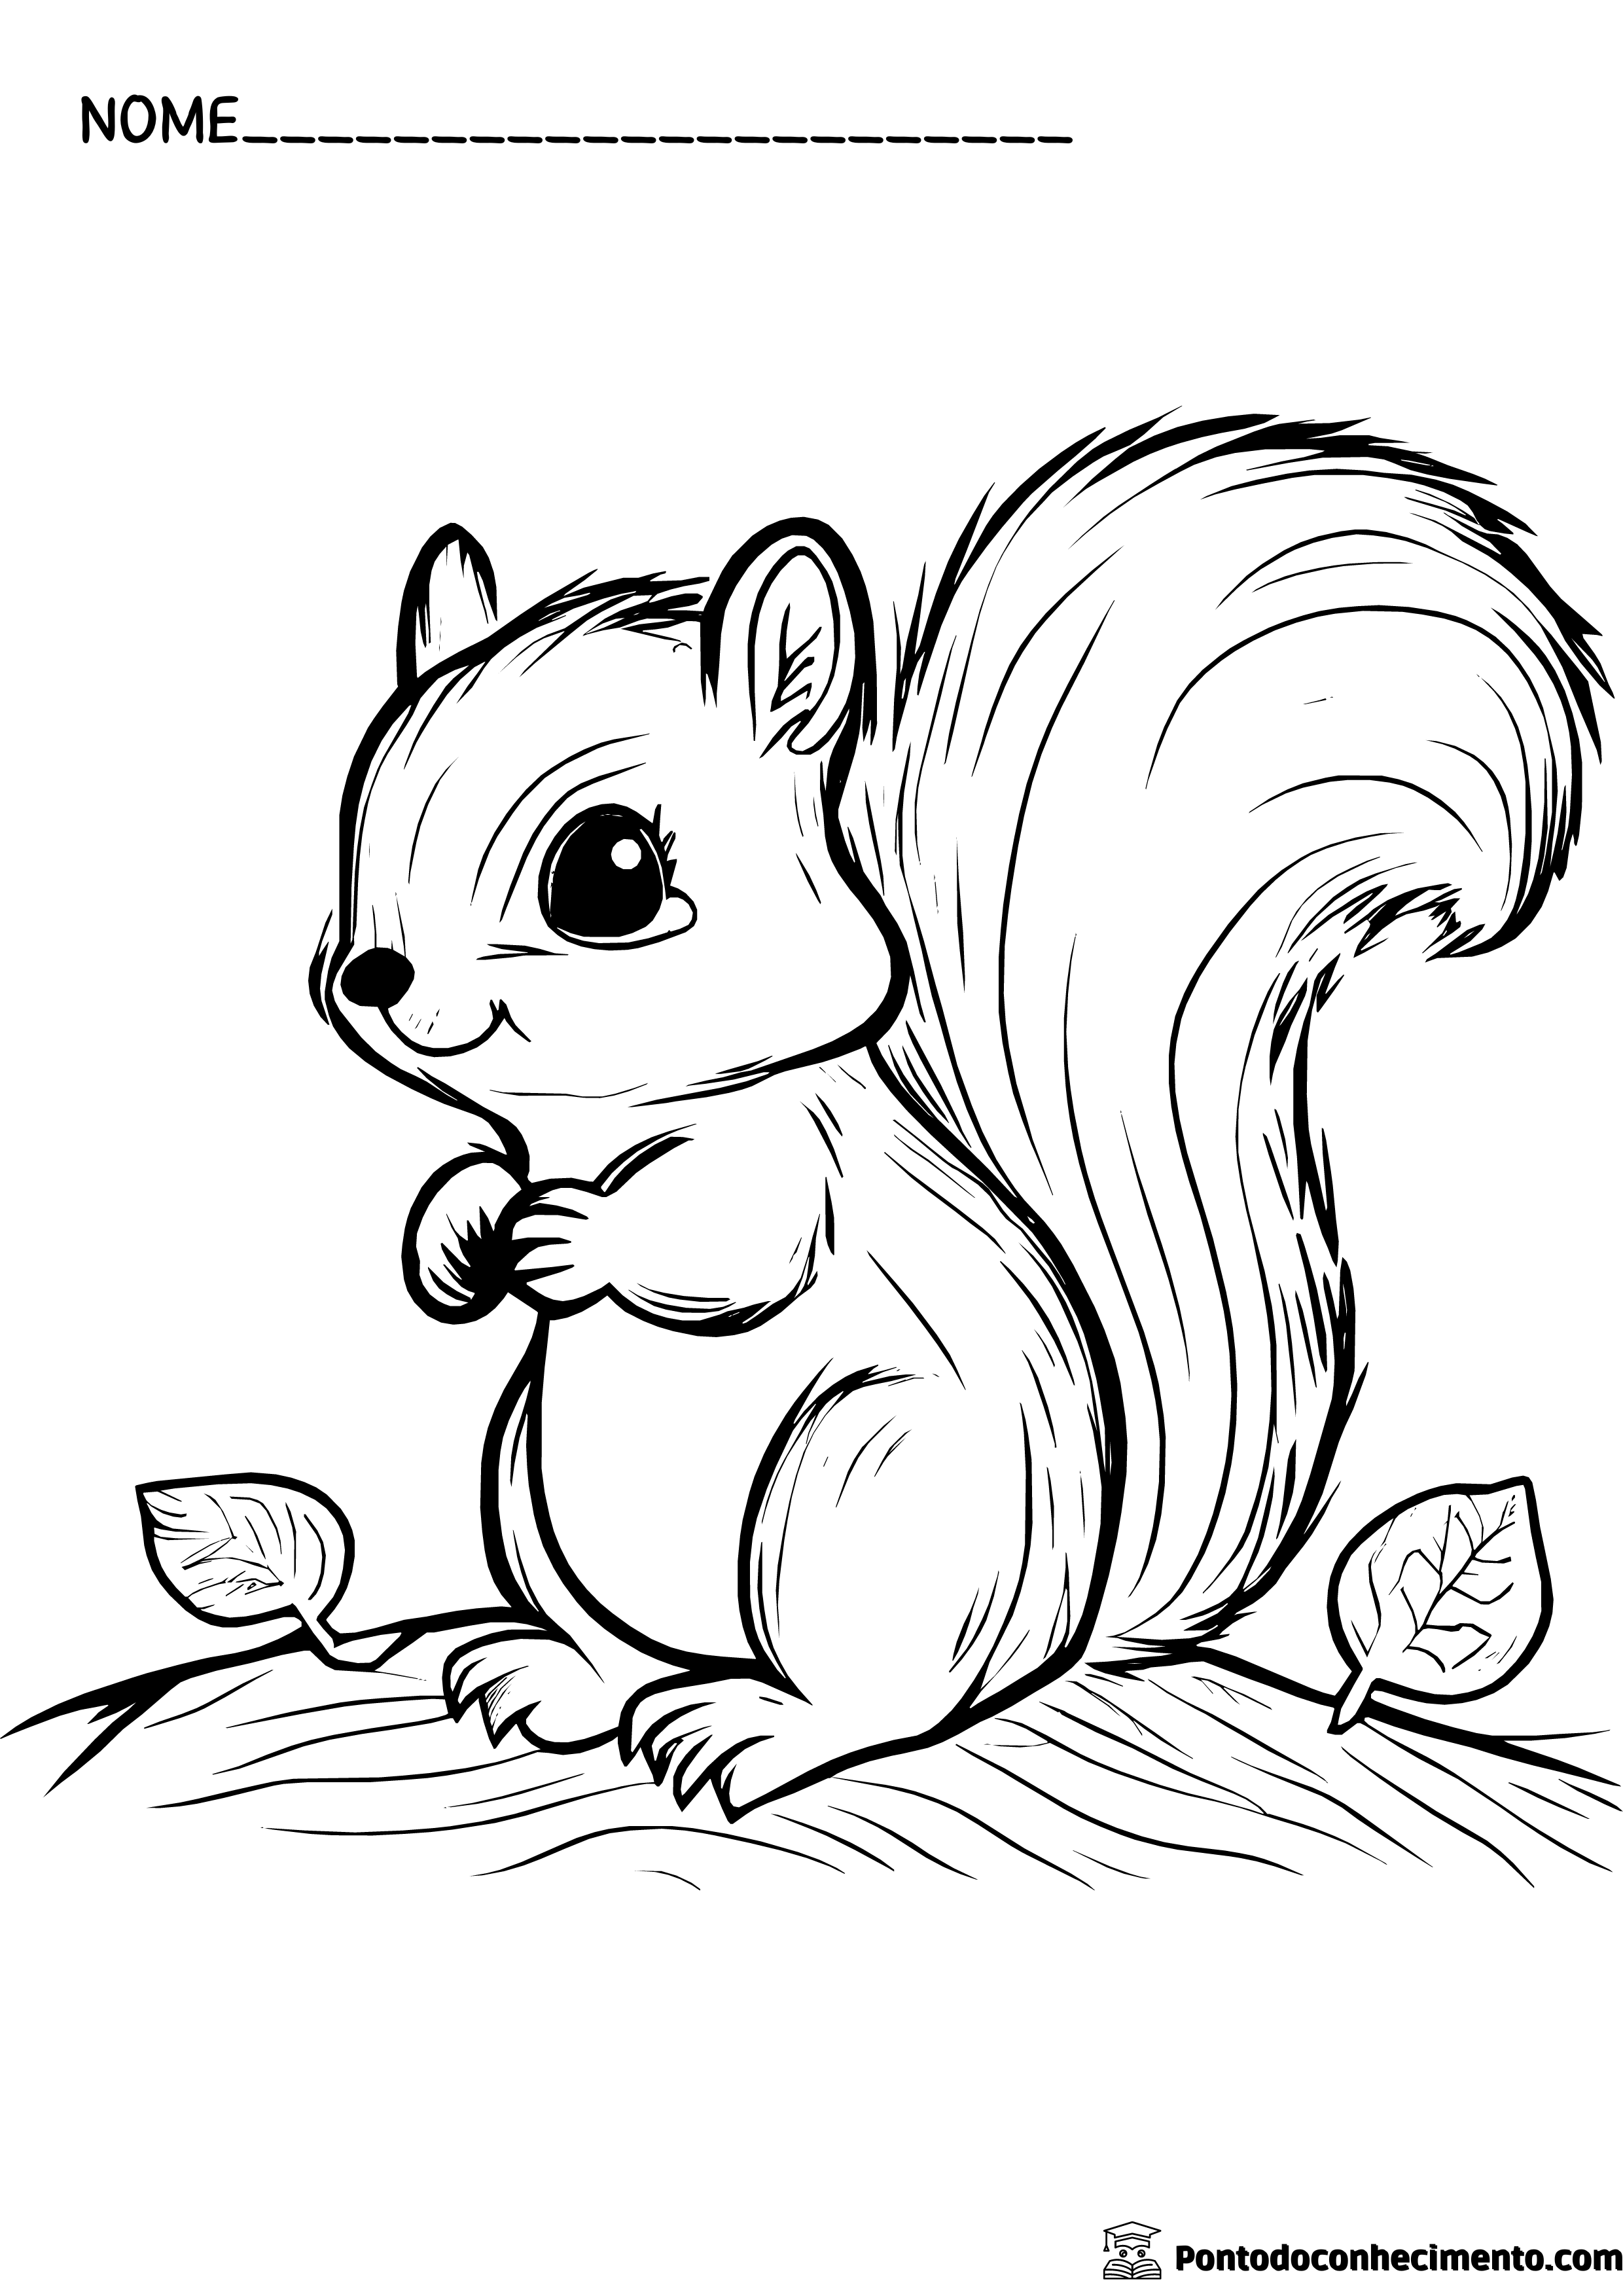 Desenhos infantis para colorir: esquilo